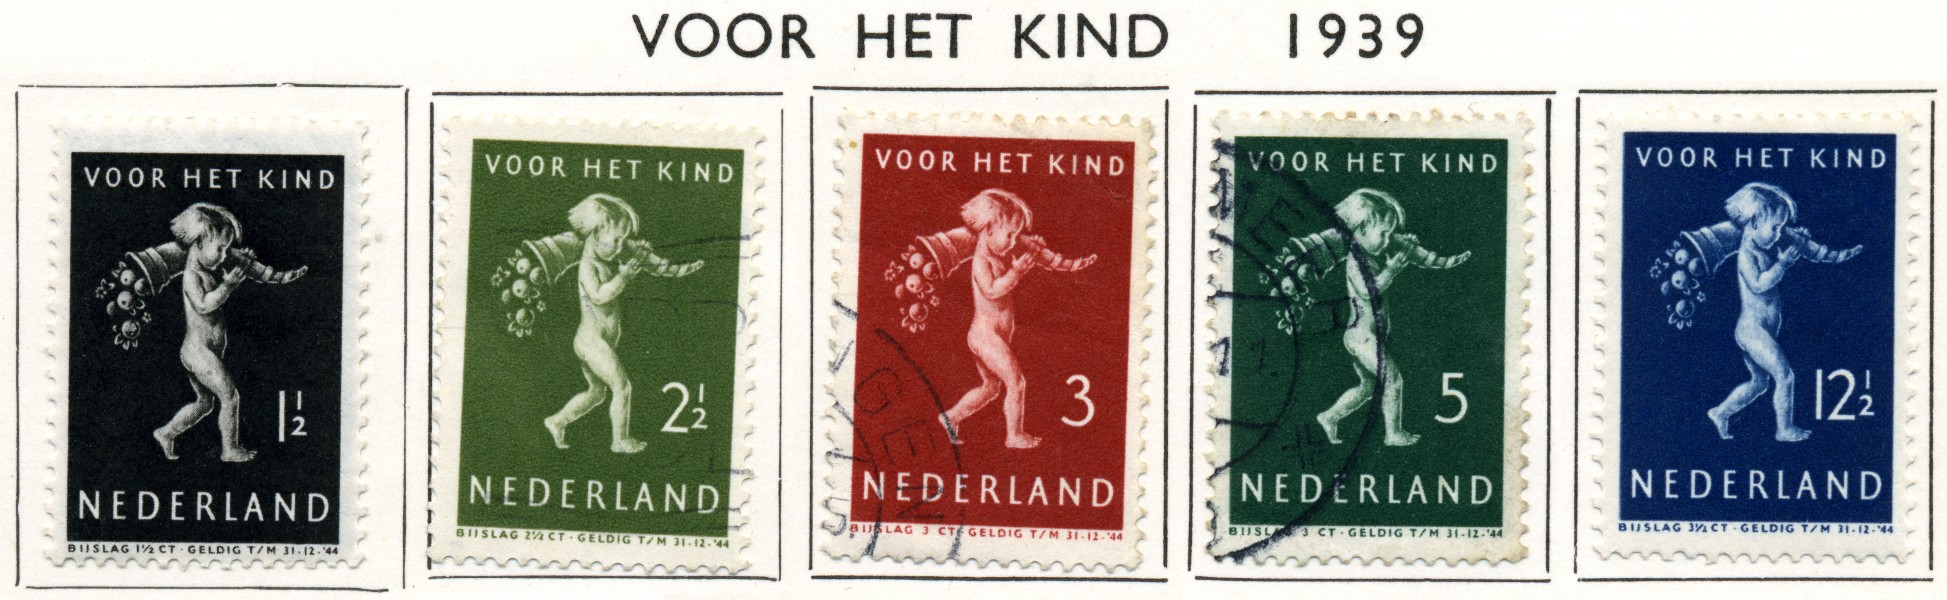 Postzegel NL 1939 nr327-331